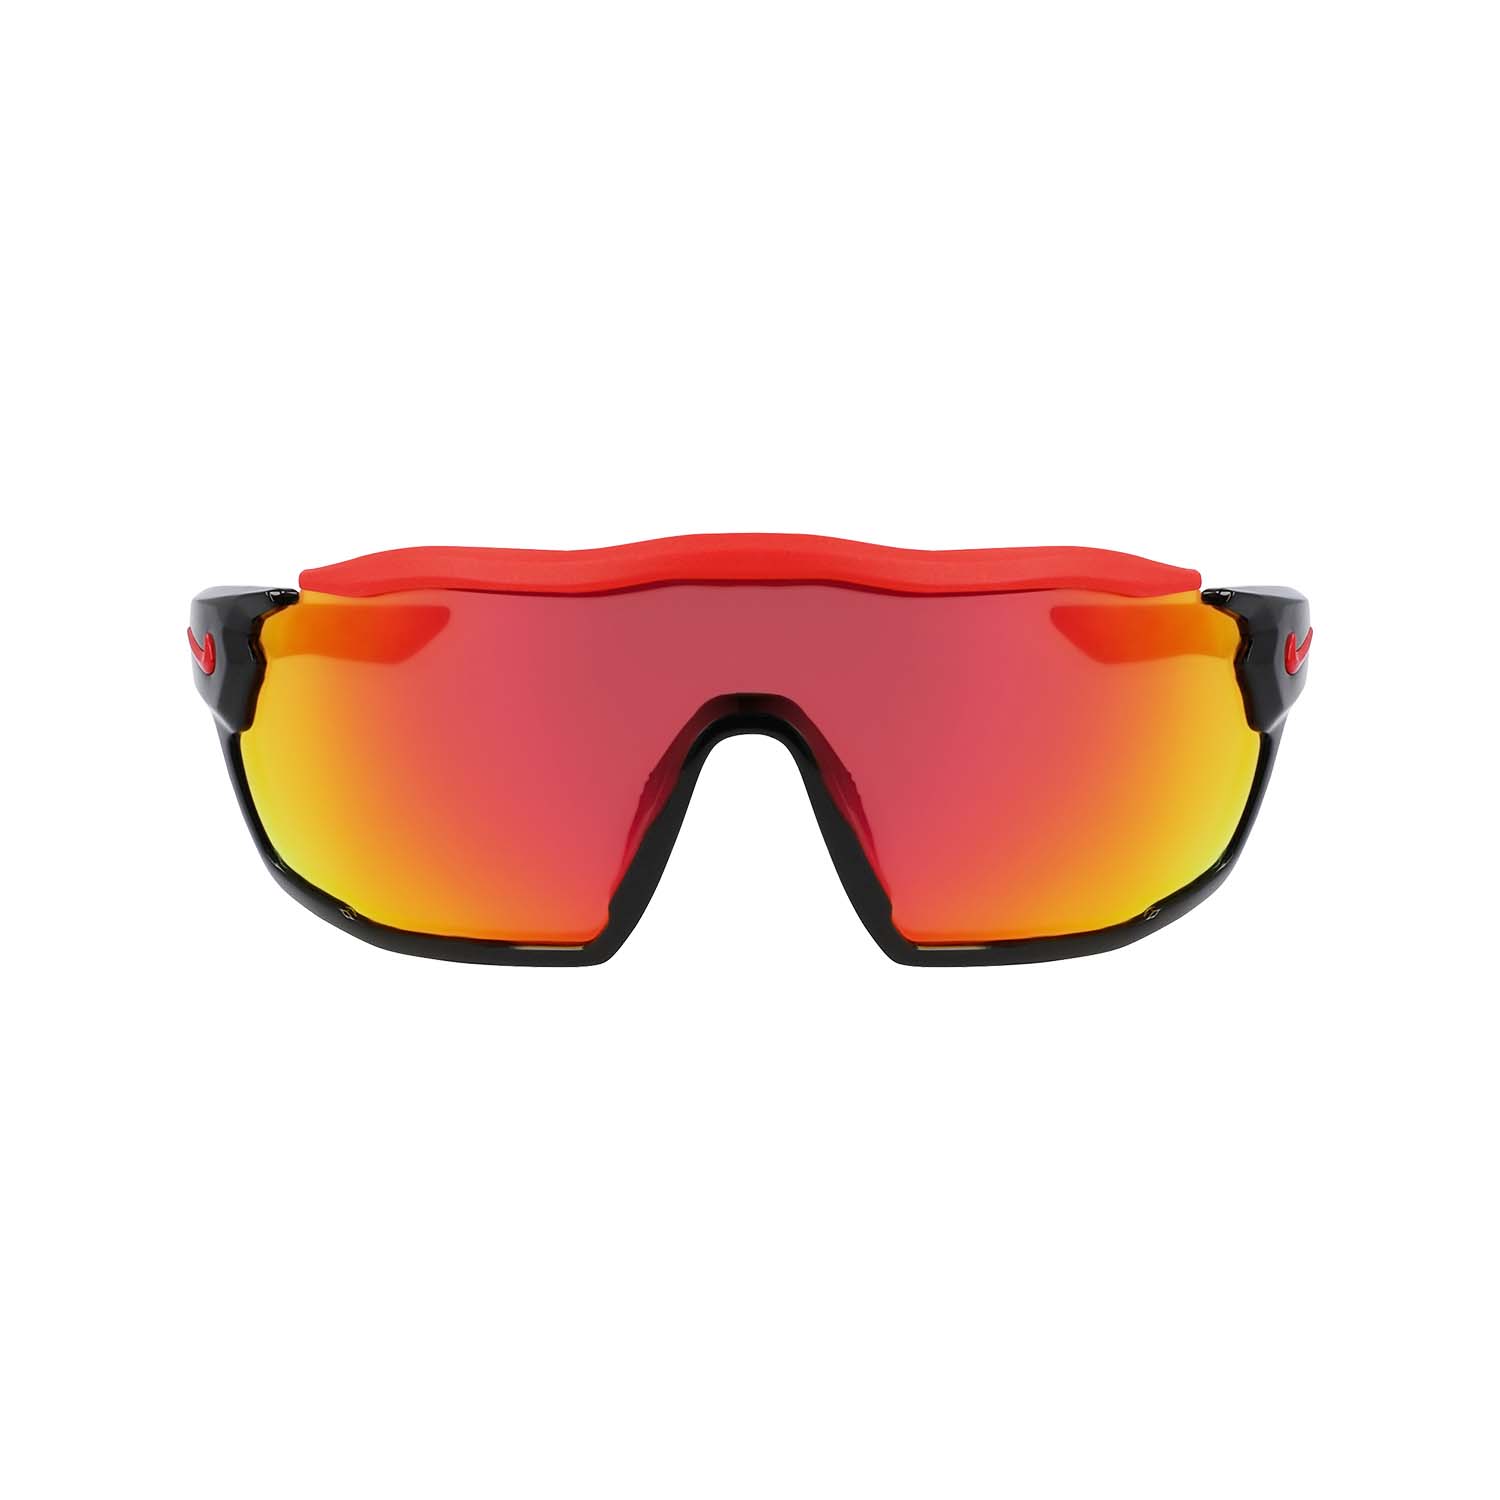 Nike Show X Rush Sunglasses - Black/Red Mirror